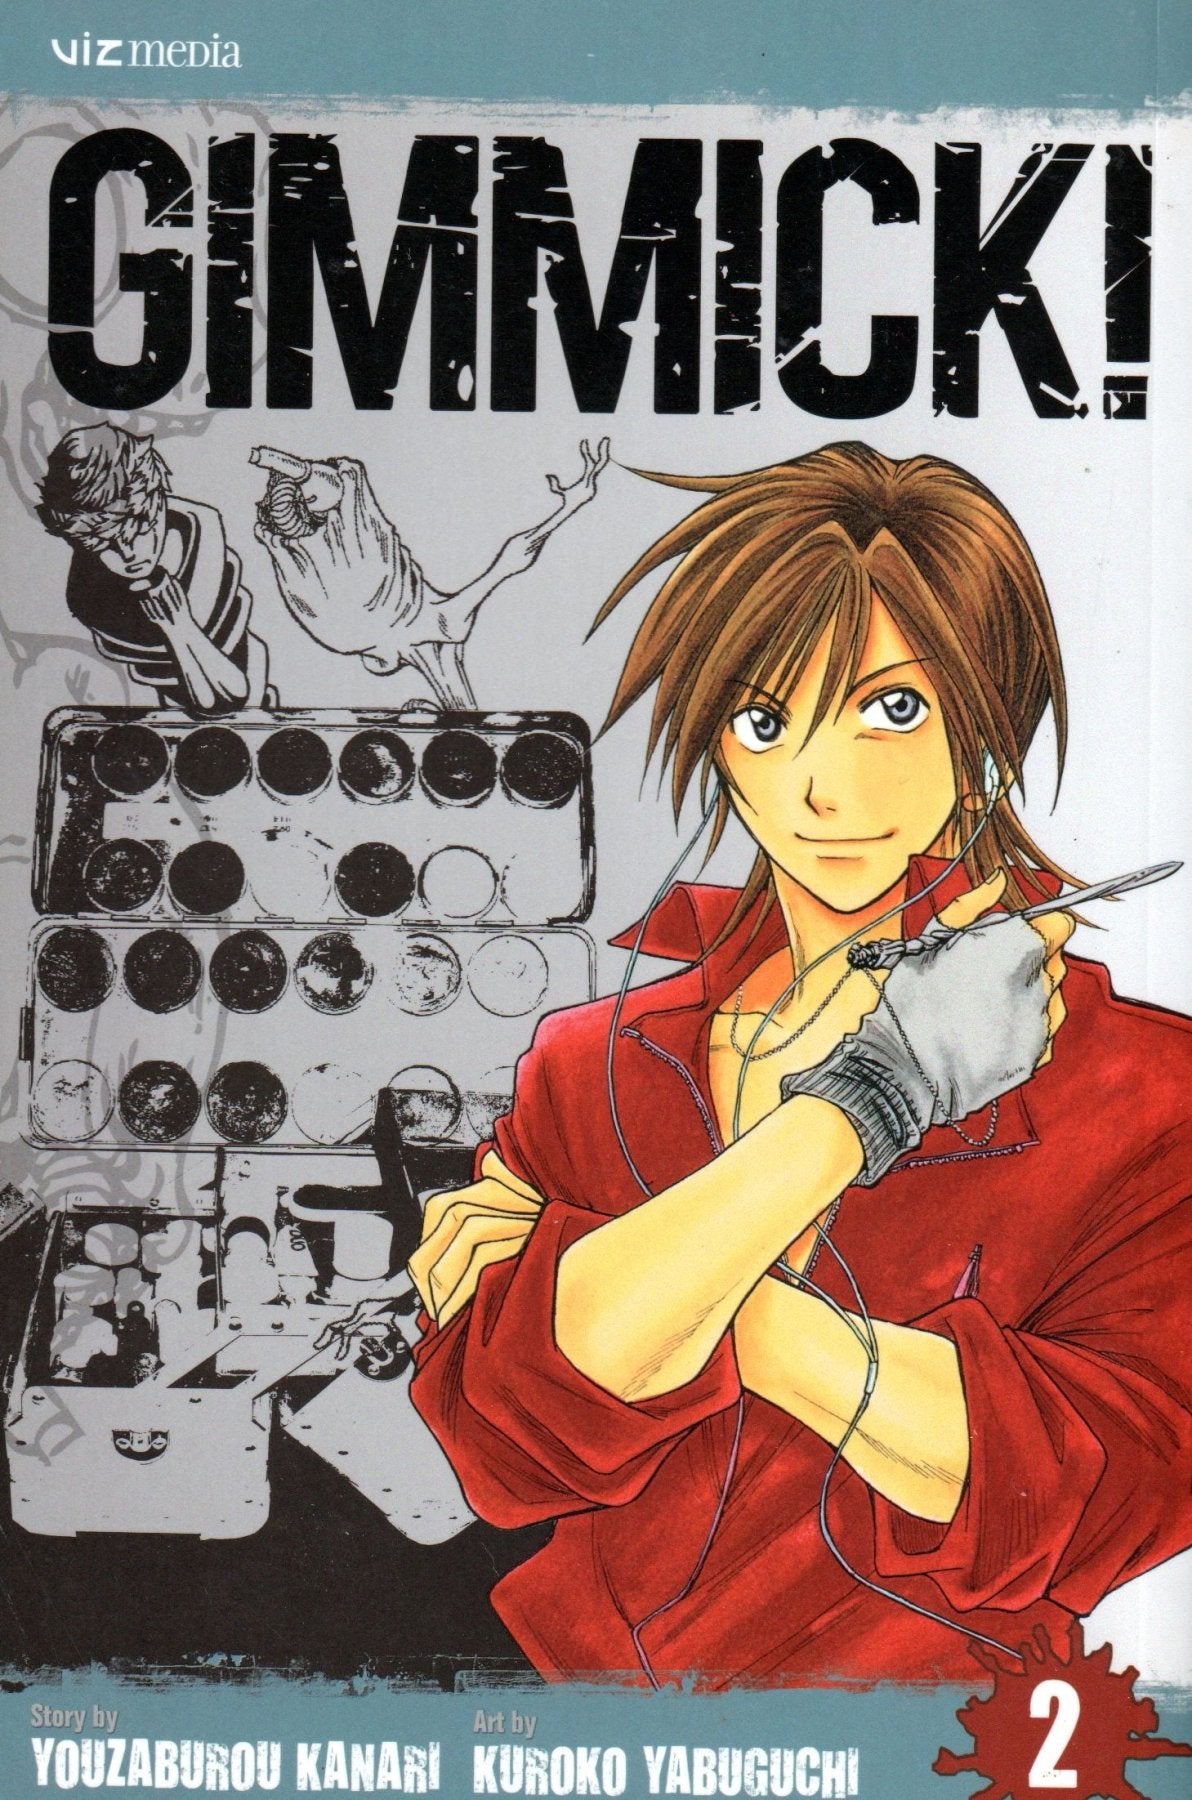 Gimmick Vol. 2 - Manga - Retro Island Gaming